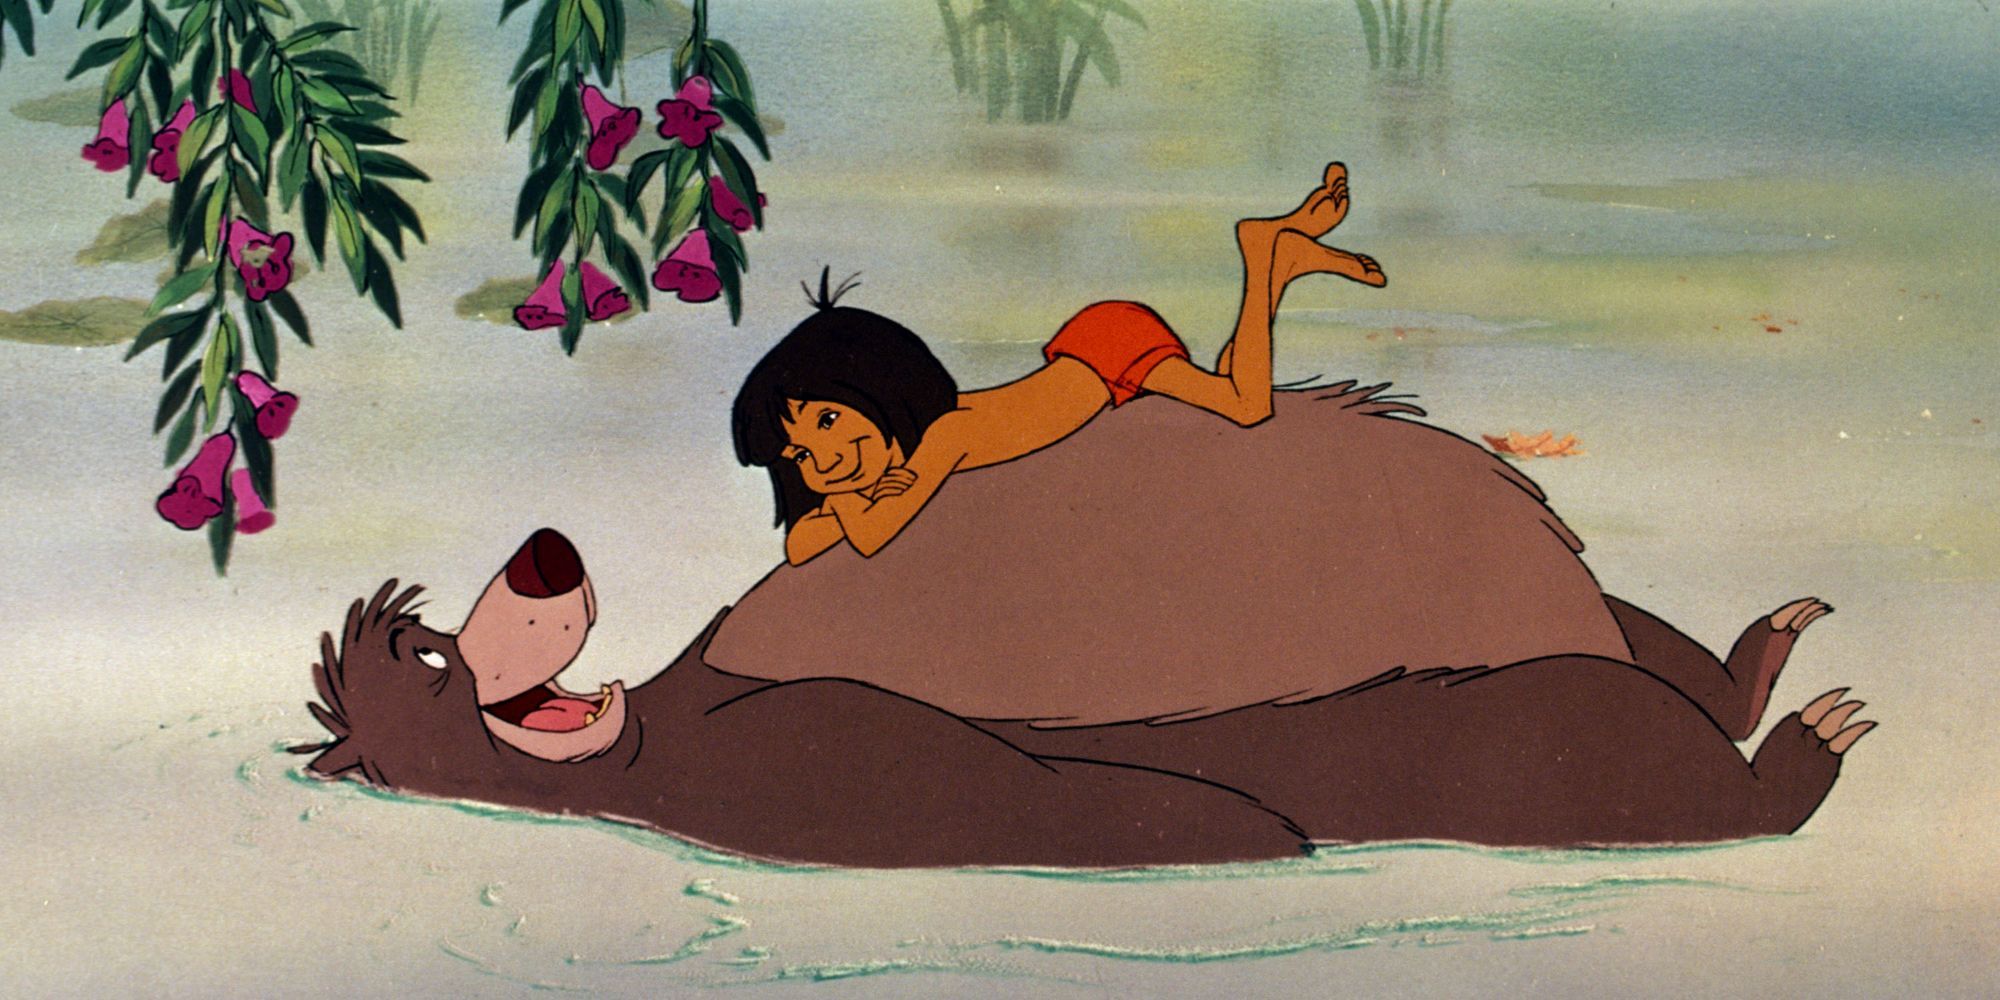 Mowgli lays on Baloo's stomach